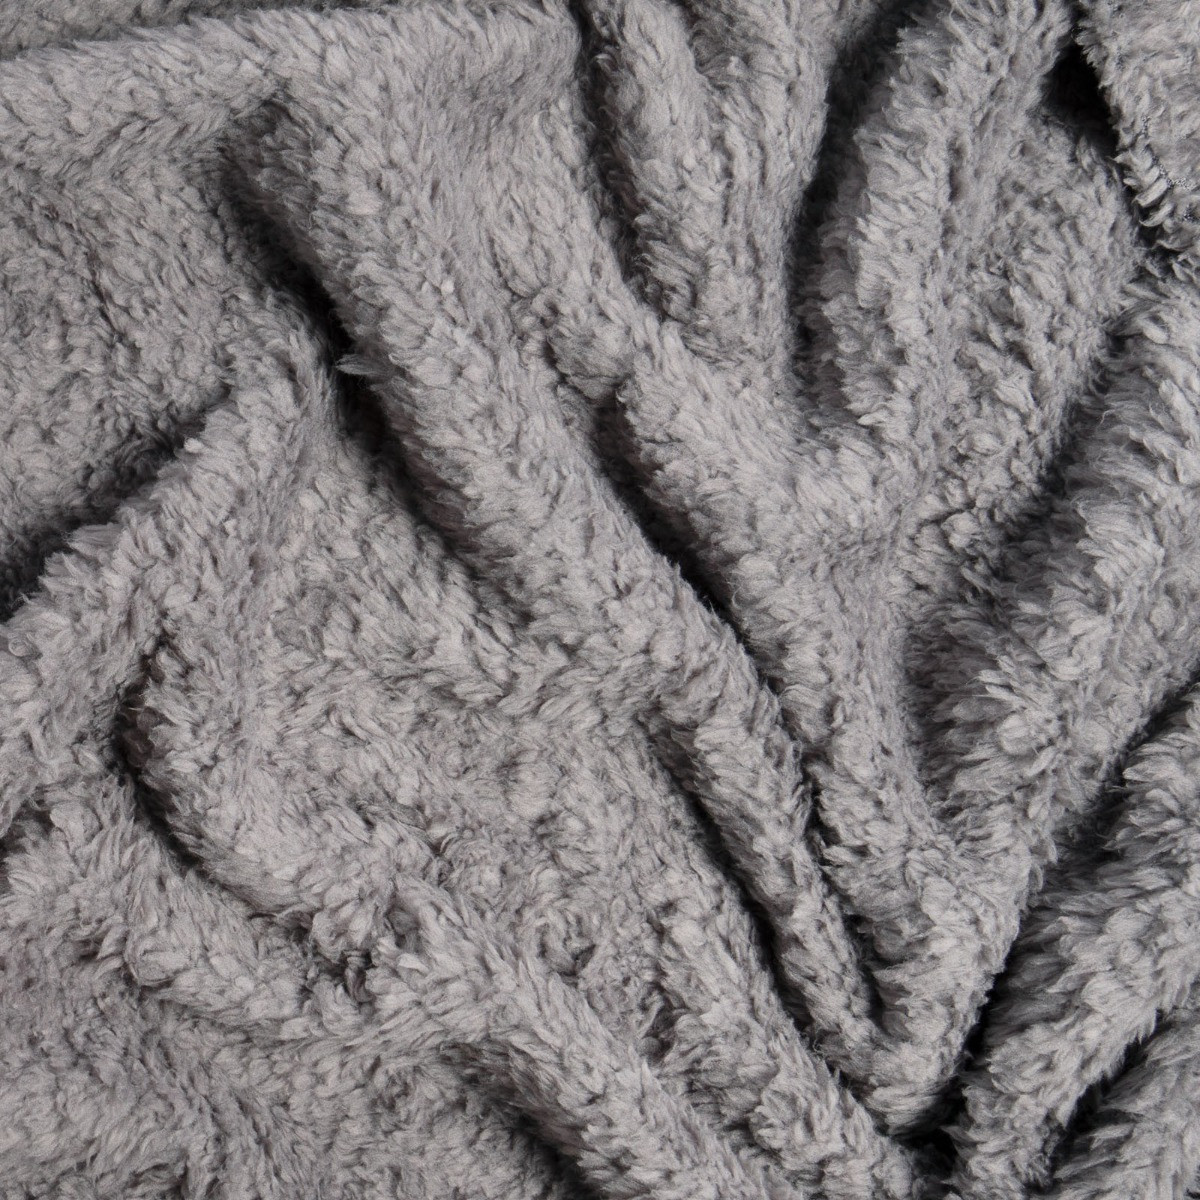 Brentfords Teddy Fleece Blanket Soft Throw Over Bed, Charcoal Grey - 200 x 240cm>